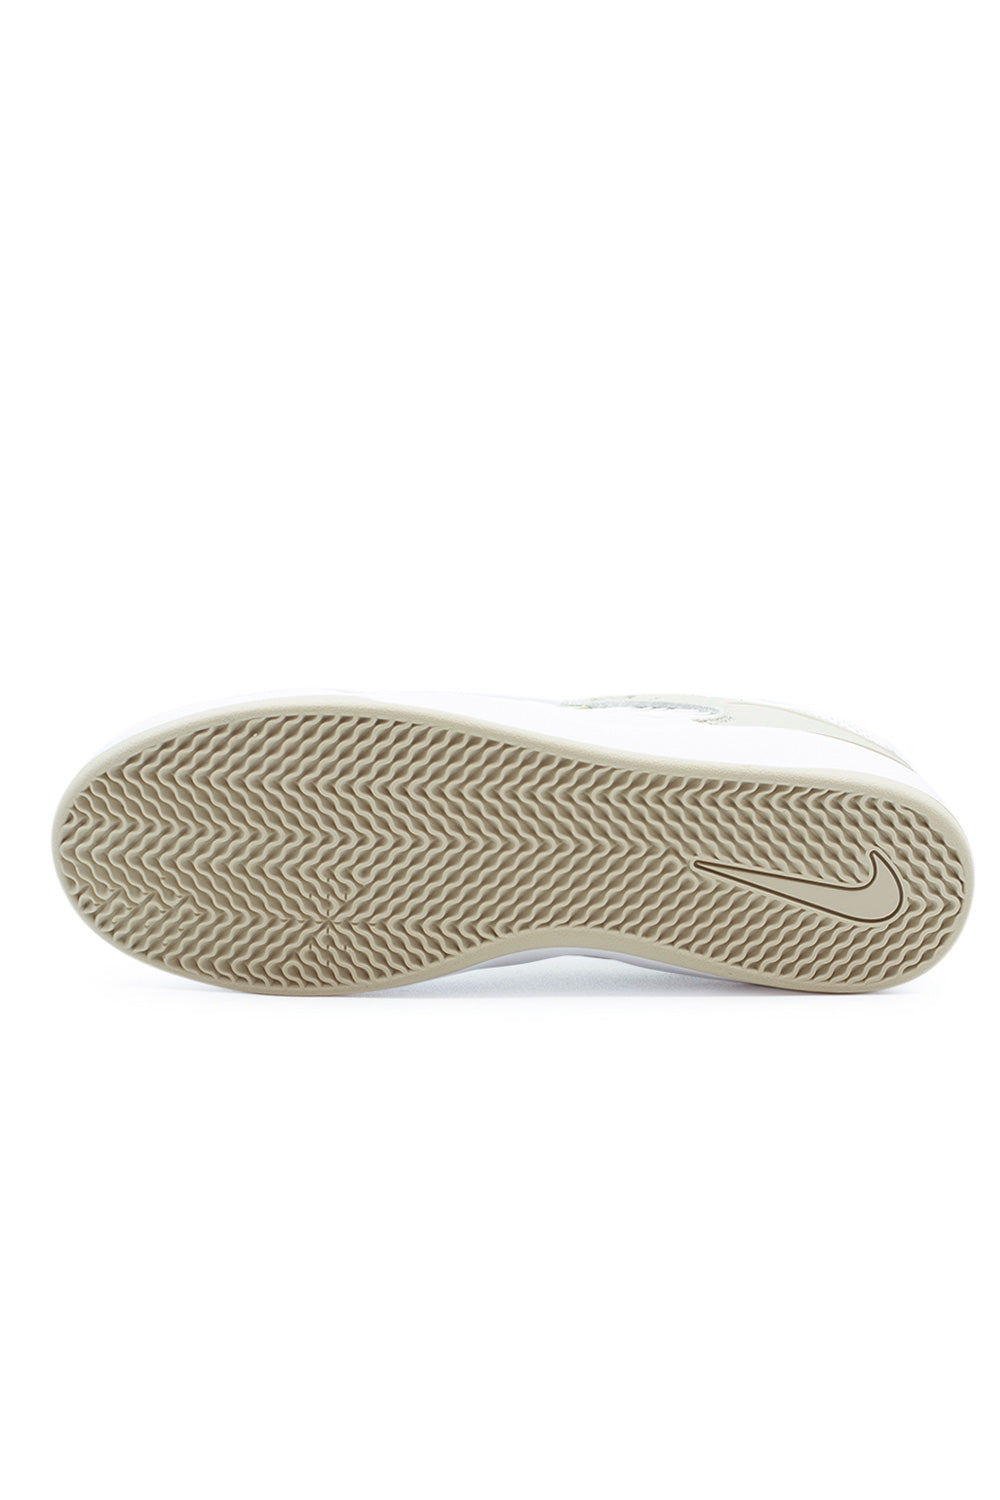 Nike SB Ishod PRM Shoe Light Stone / Khaki / Summit White - BONKERS